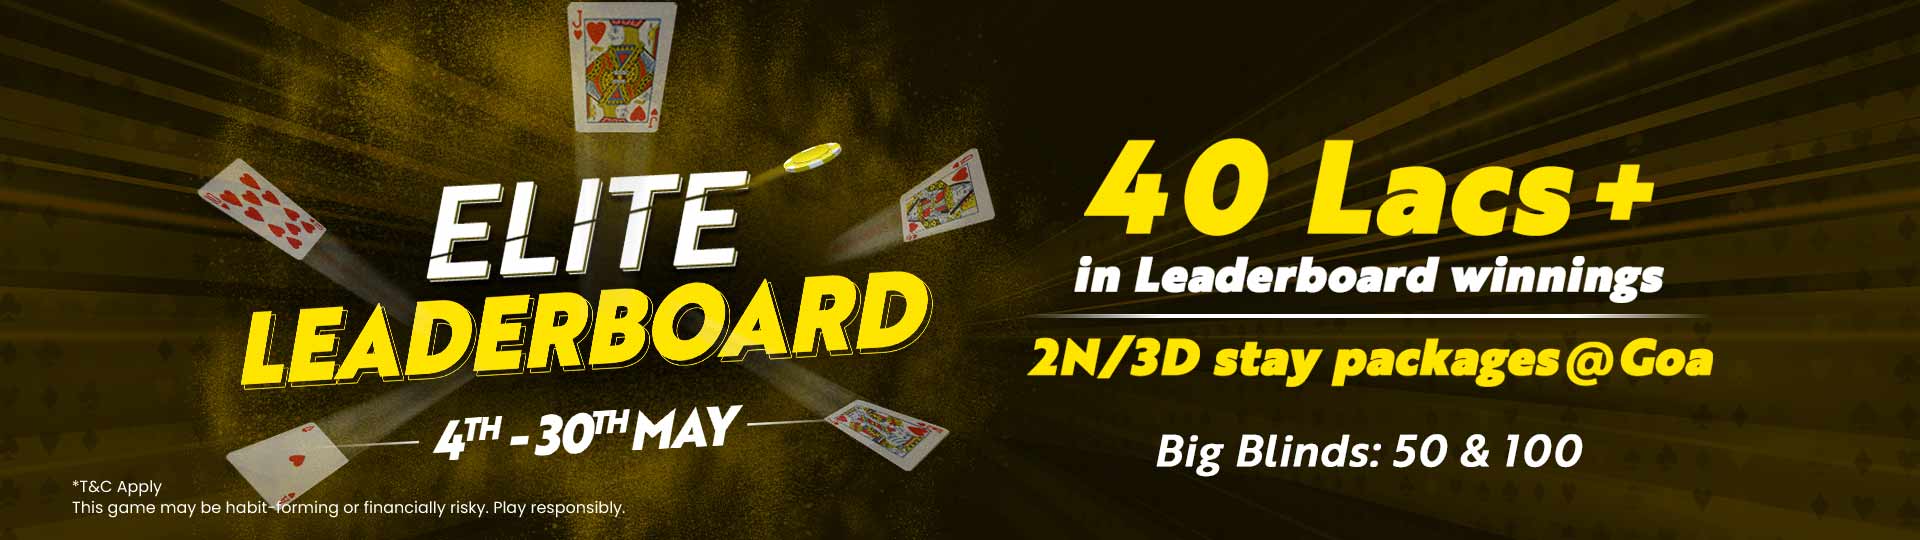 Adda52|Online|Poker|Elite Leaderboards |May